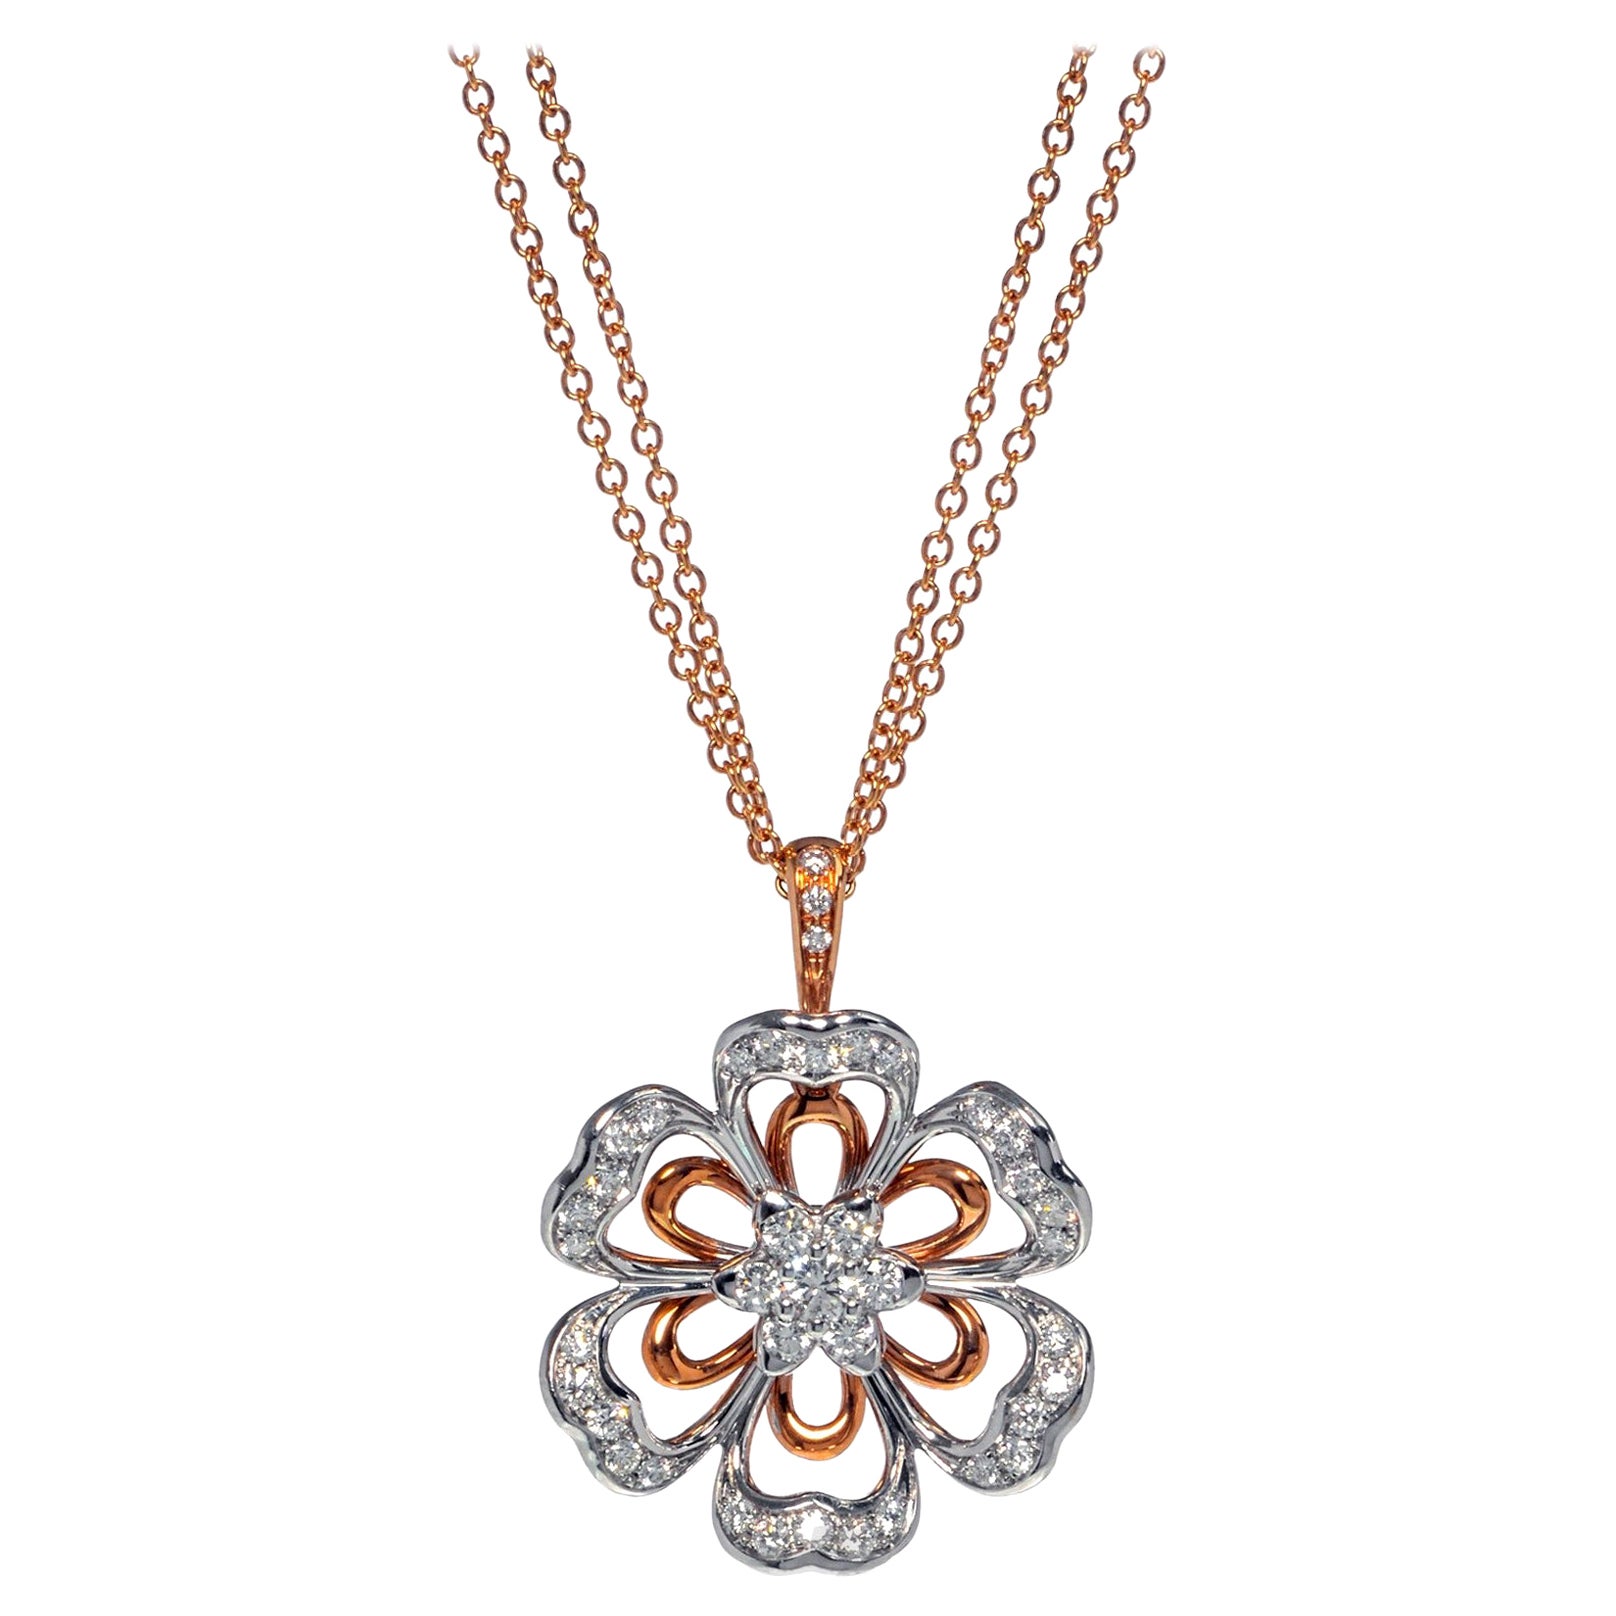 Luca Carati Diamond Flower Pendant Necklace 18K Rose & White Gold 1.11Cttw For Sale